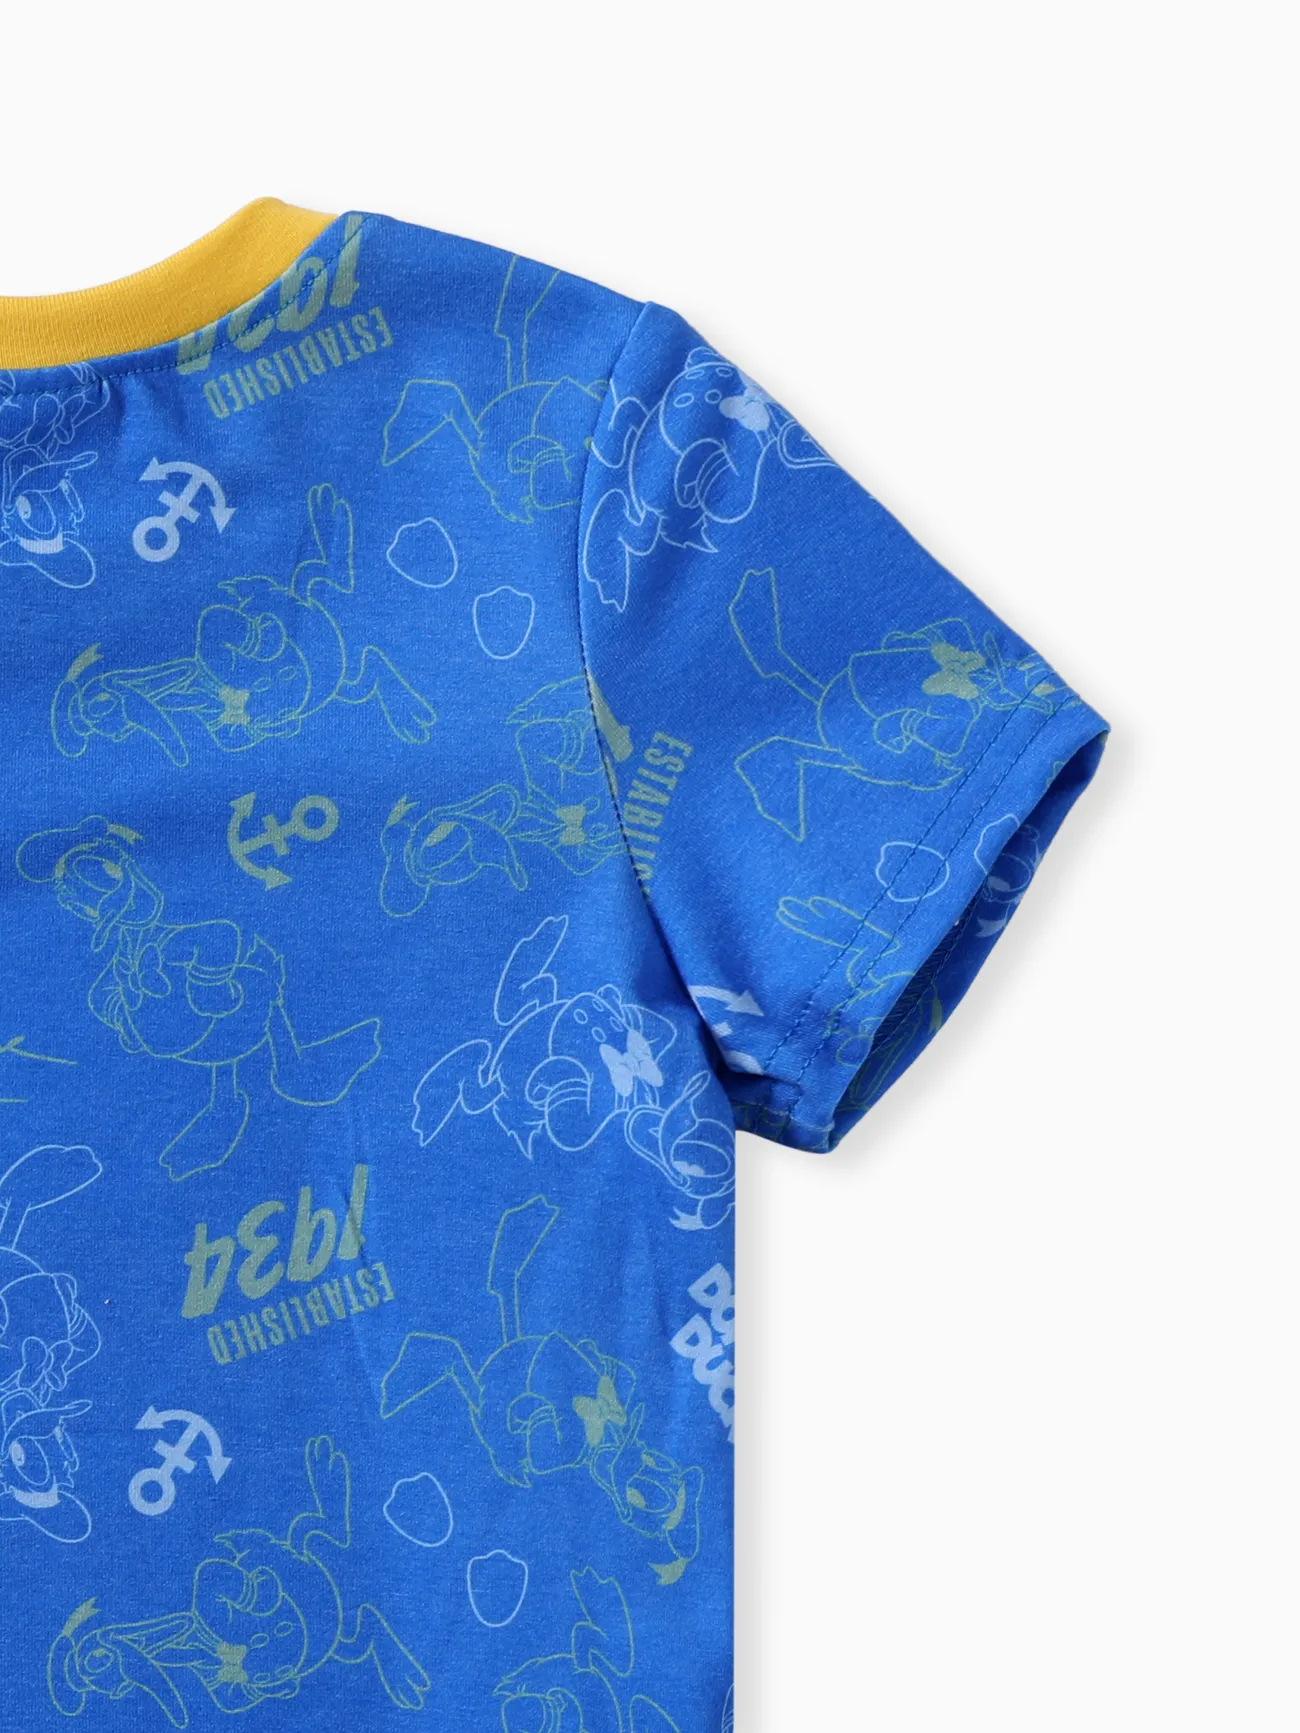 Disney Mickey and Friends Unissexo Infantil T-shirts Azul big image 1